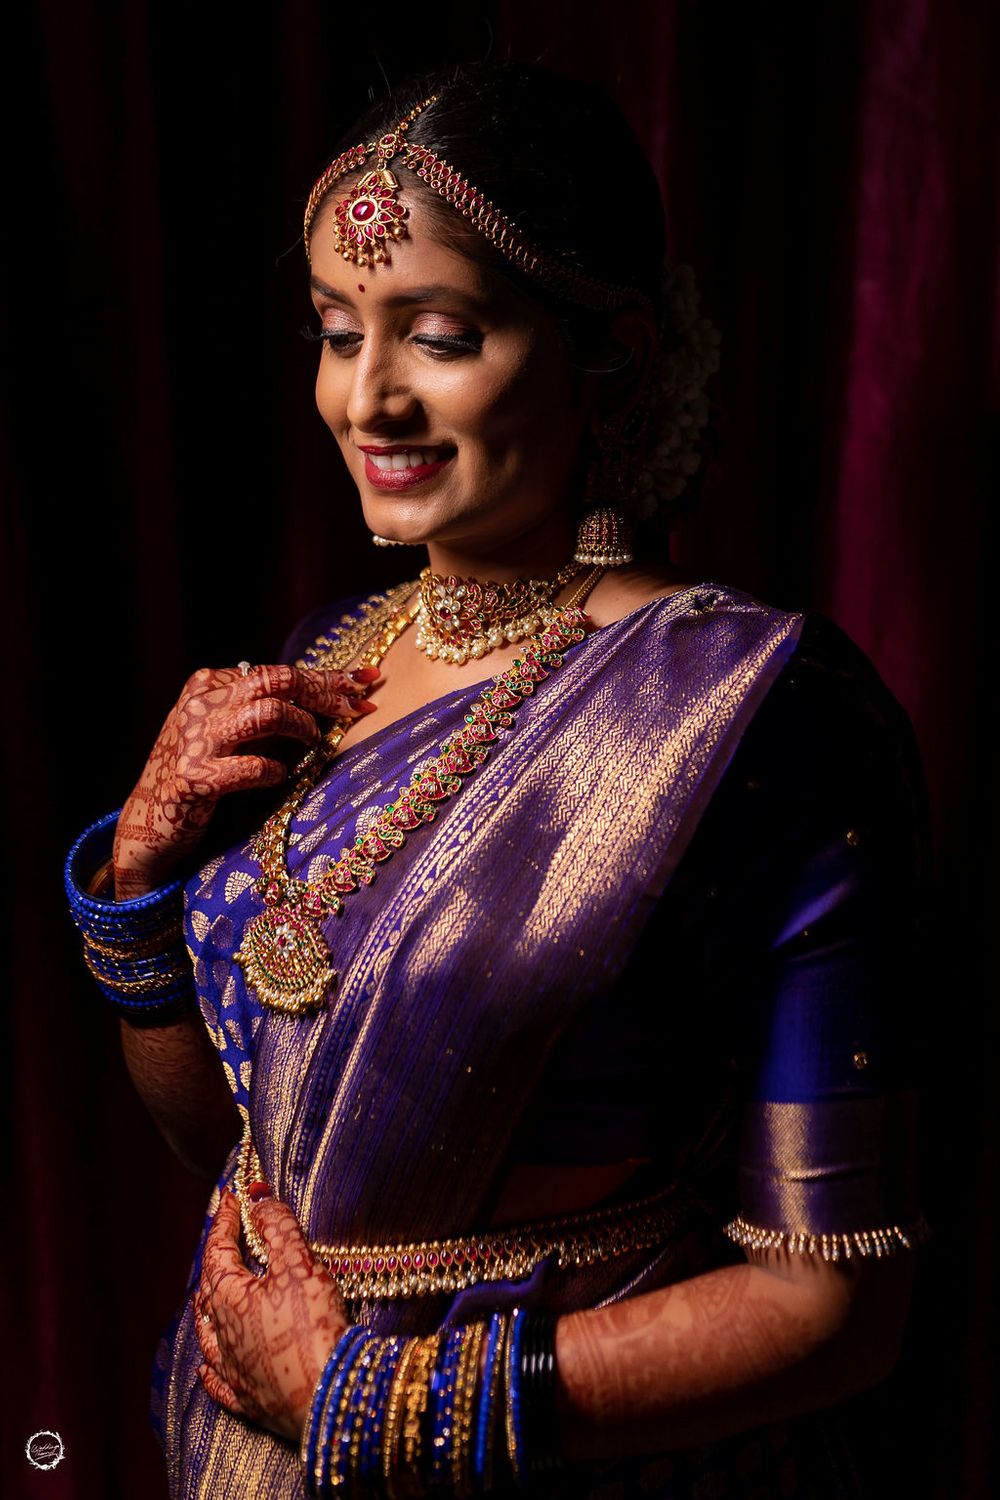 Photo From Pooja & Basu - By Wedding Theory